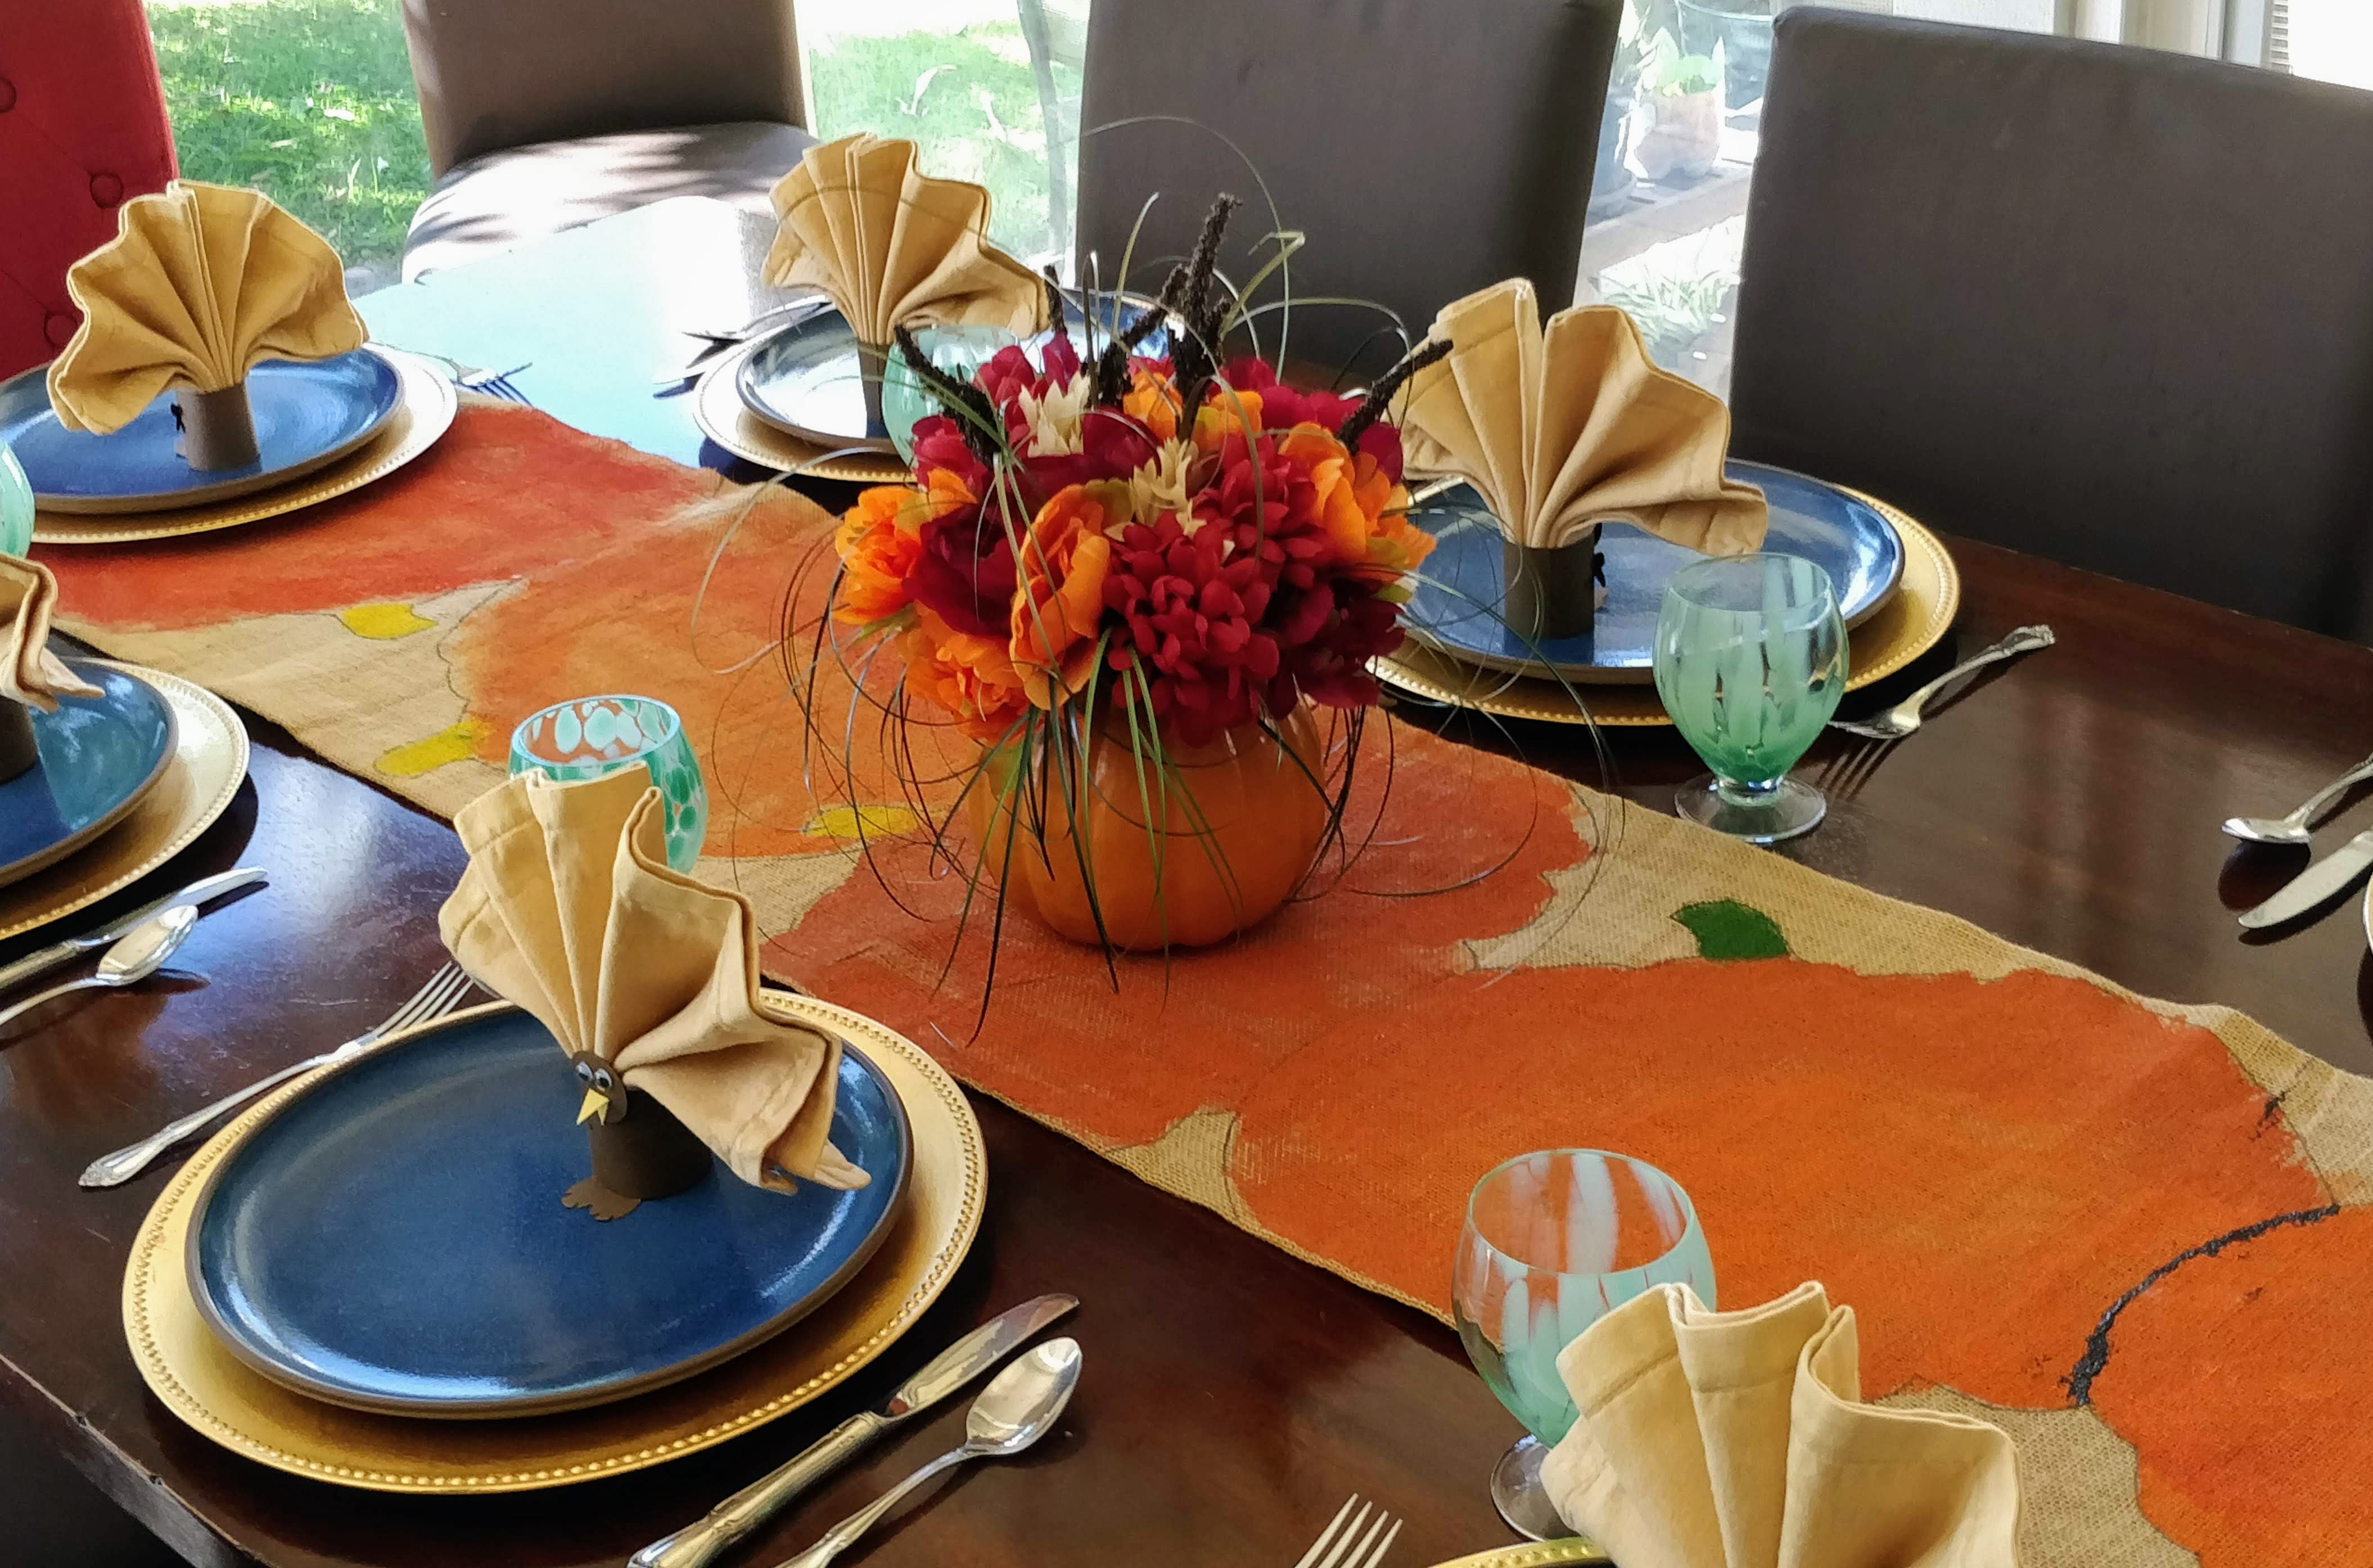 Festive Fall Table Setting